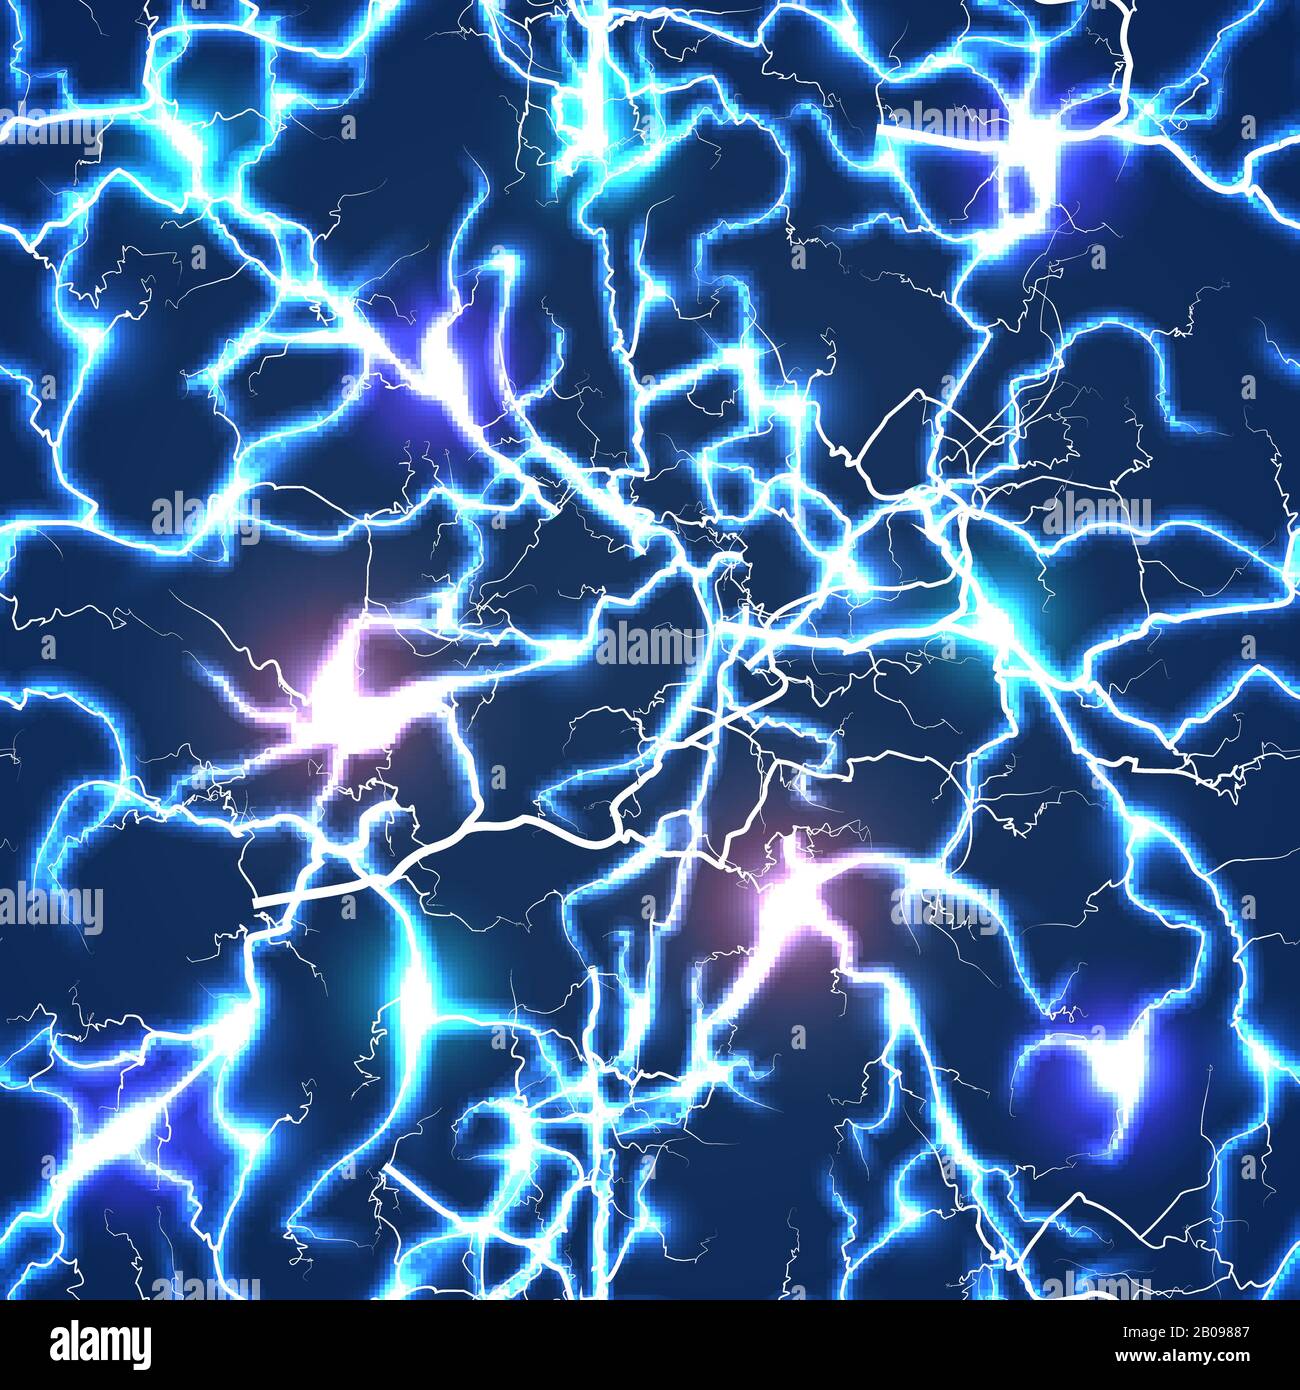 Blue lightning flash background hi-res stock photography and images - Alamy